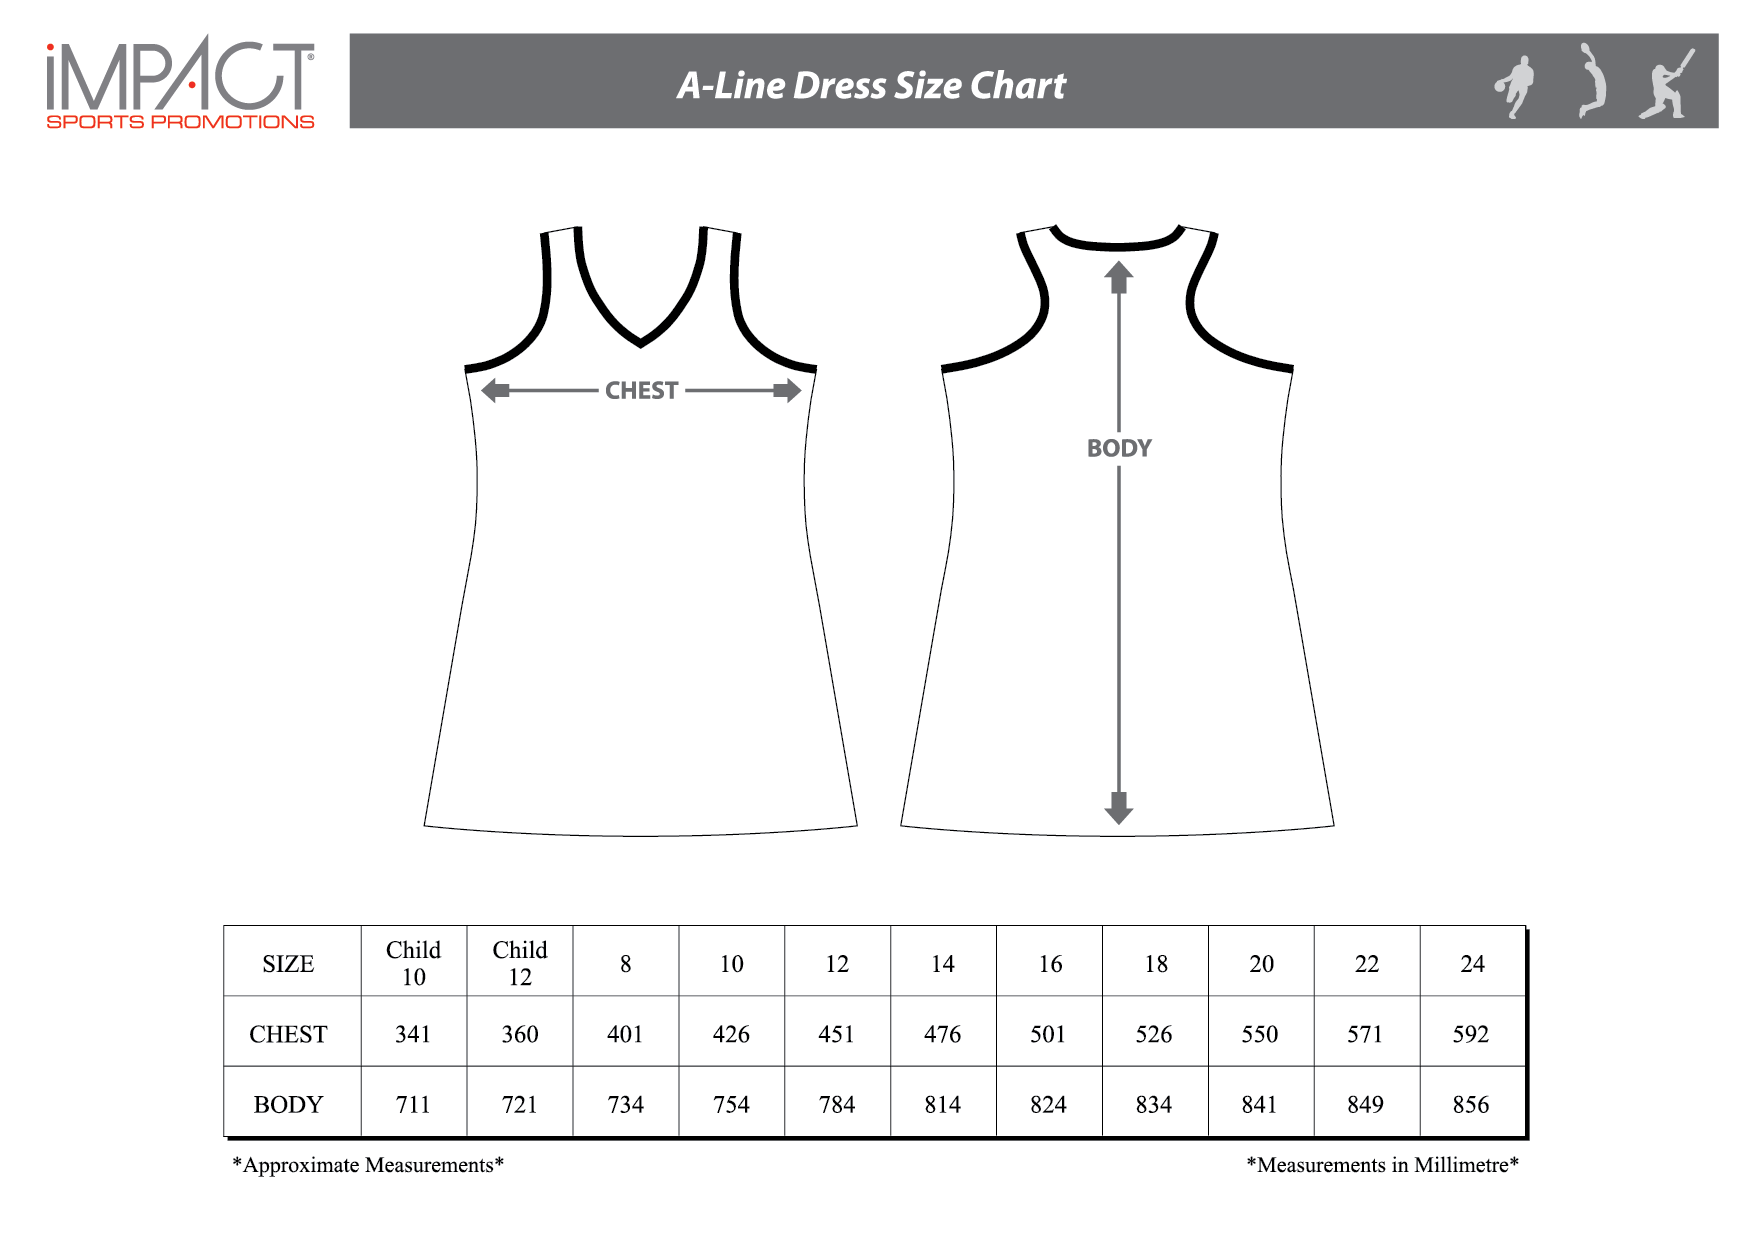 Impact SP Gen A-Line Dress Size Chart